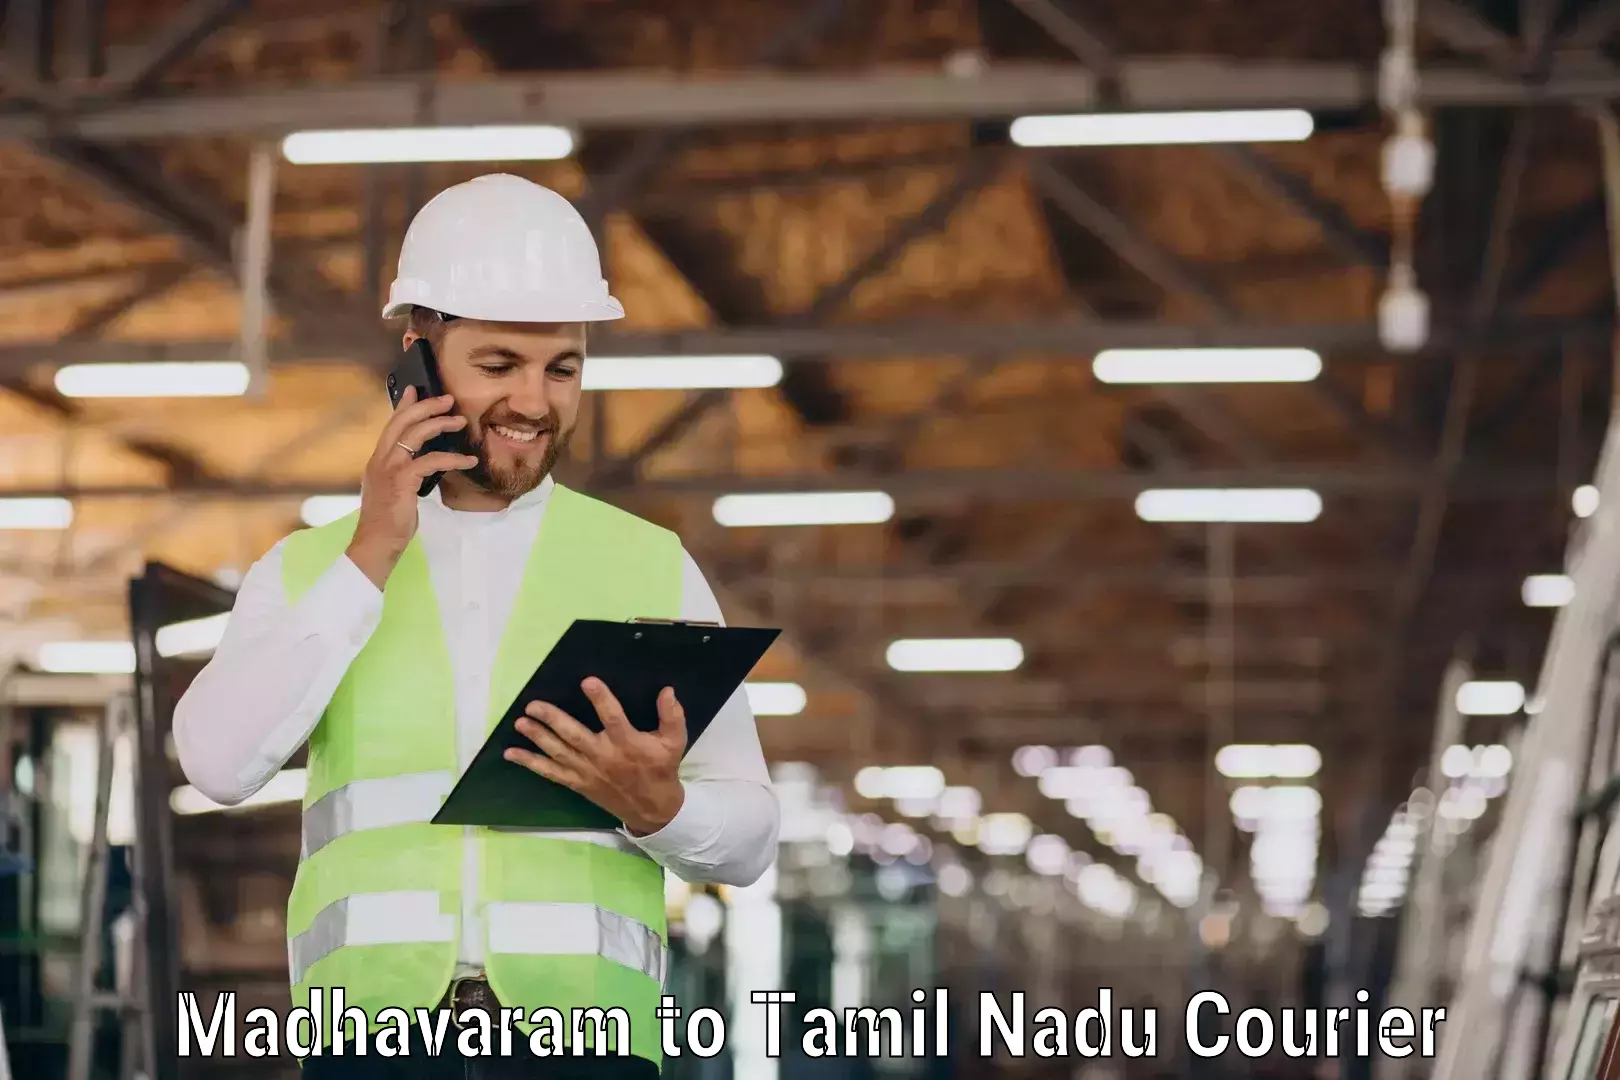 Courier app Madhavaram to Manamadurai